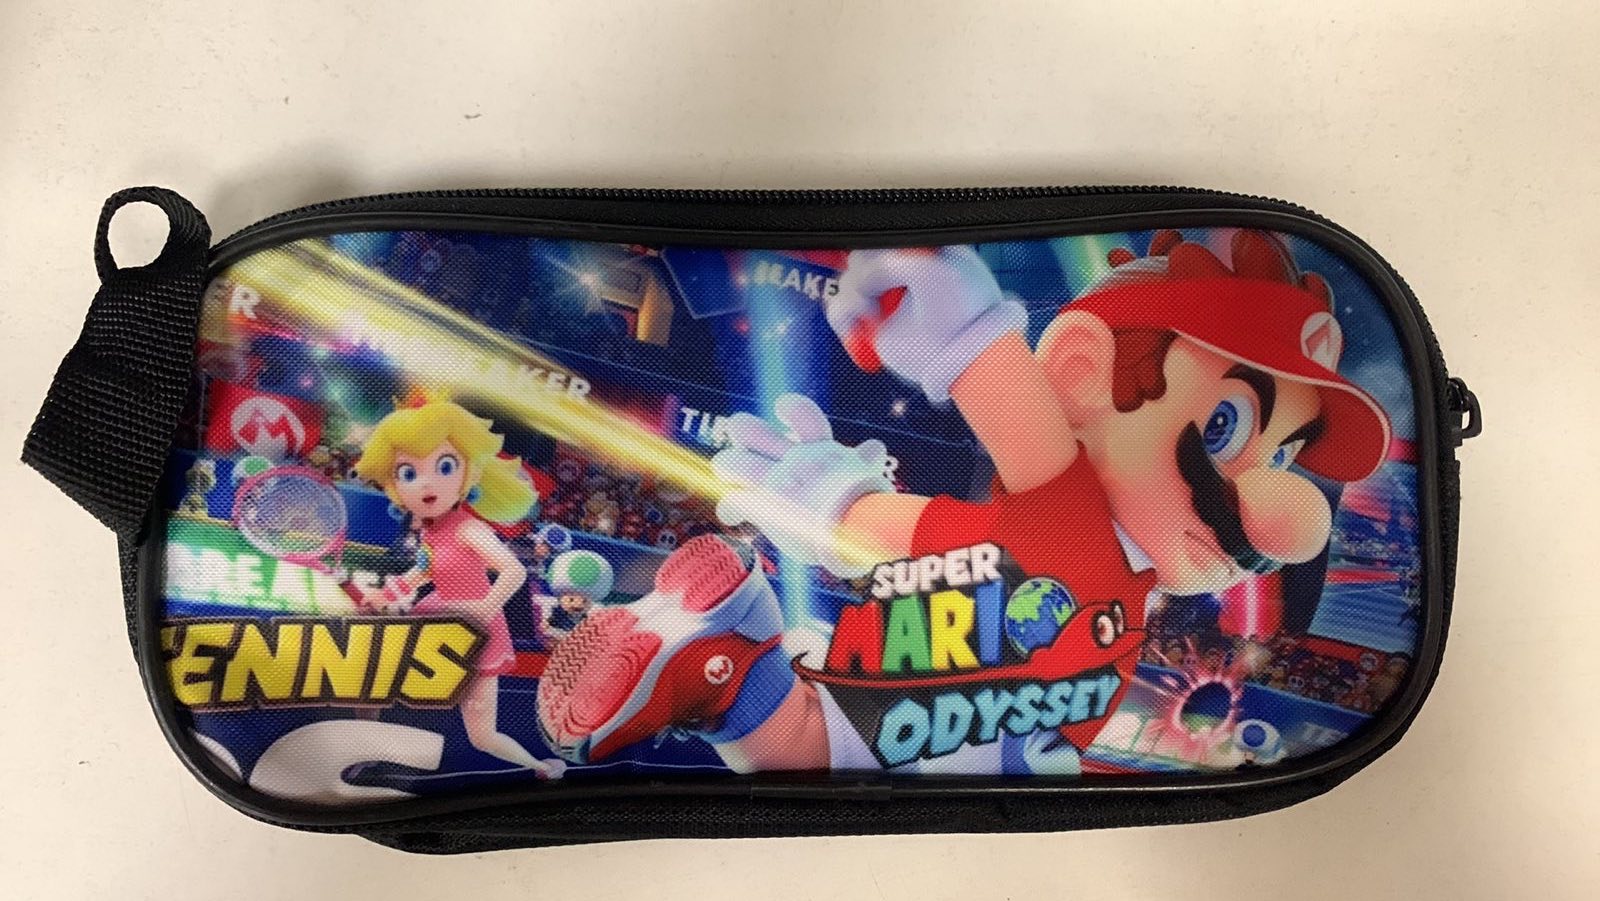 Mario Tennis Super Mario Odyssey Nintendo Switch Carrying Case